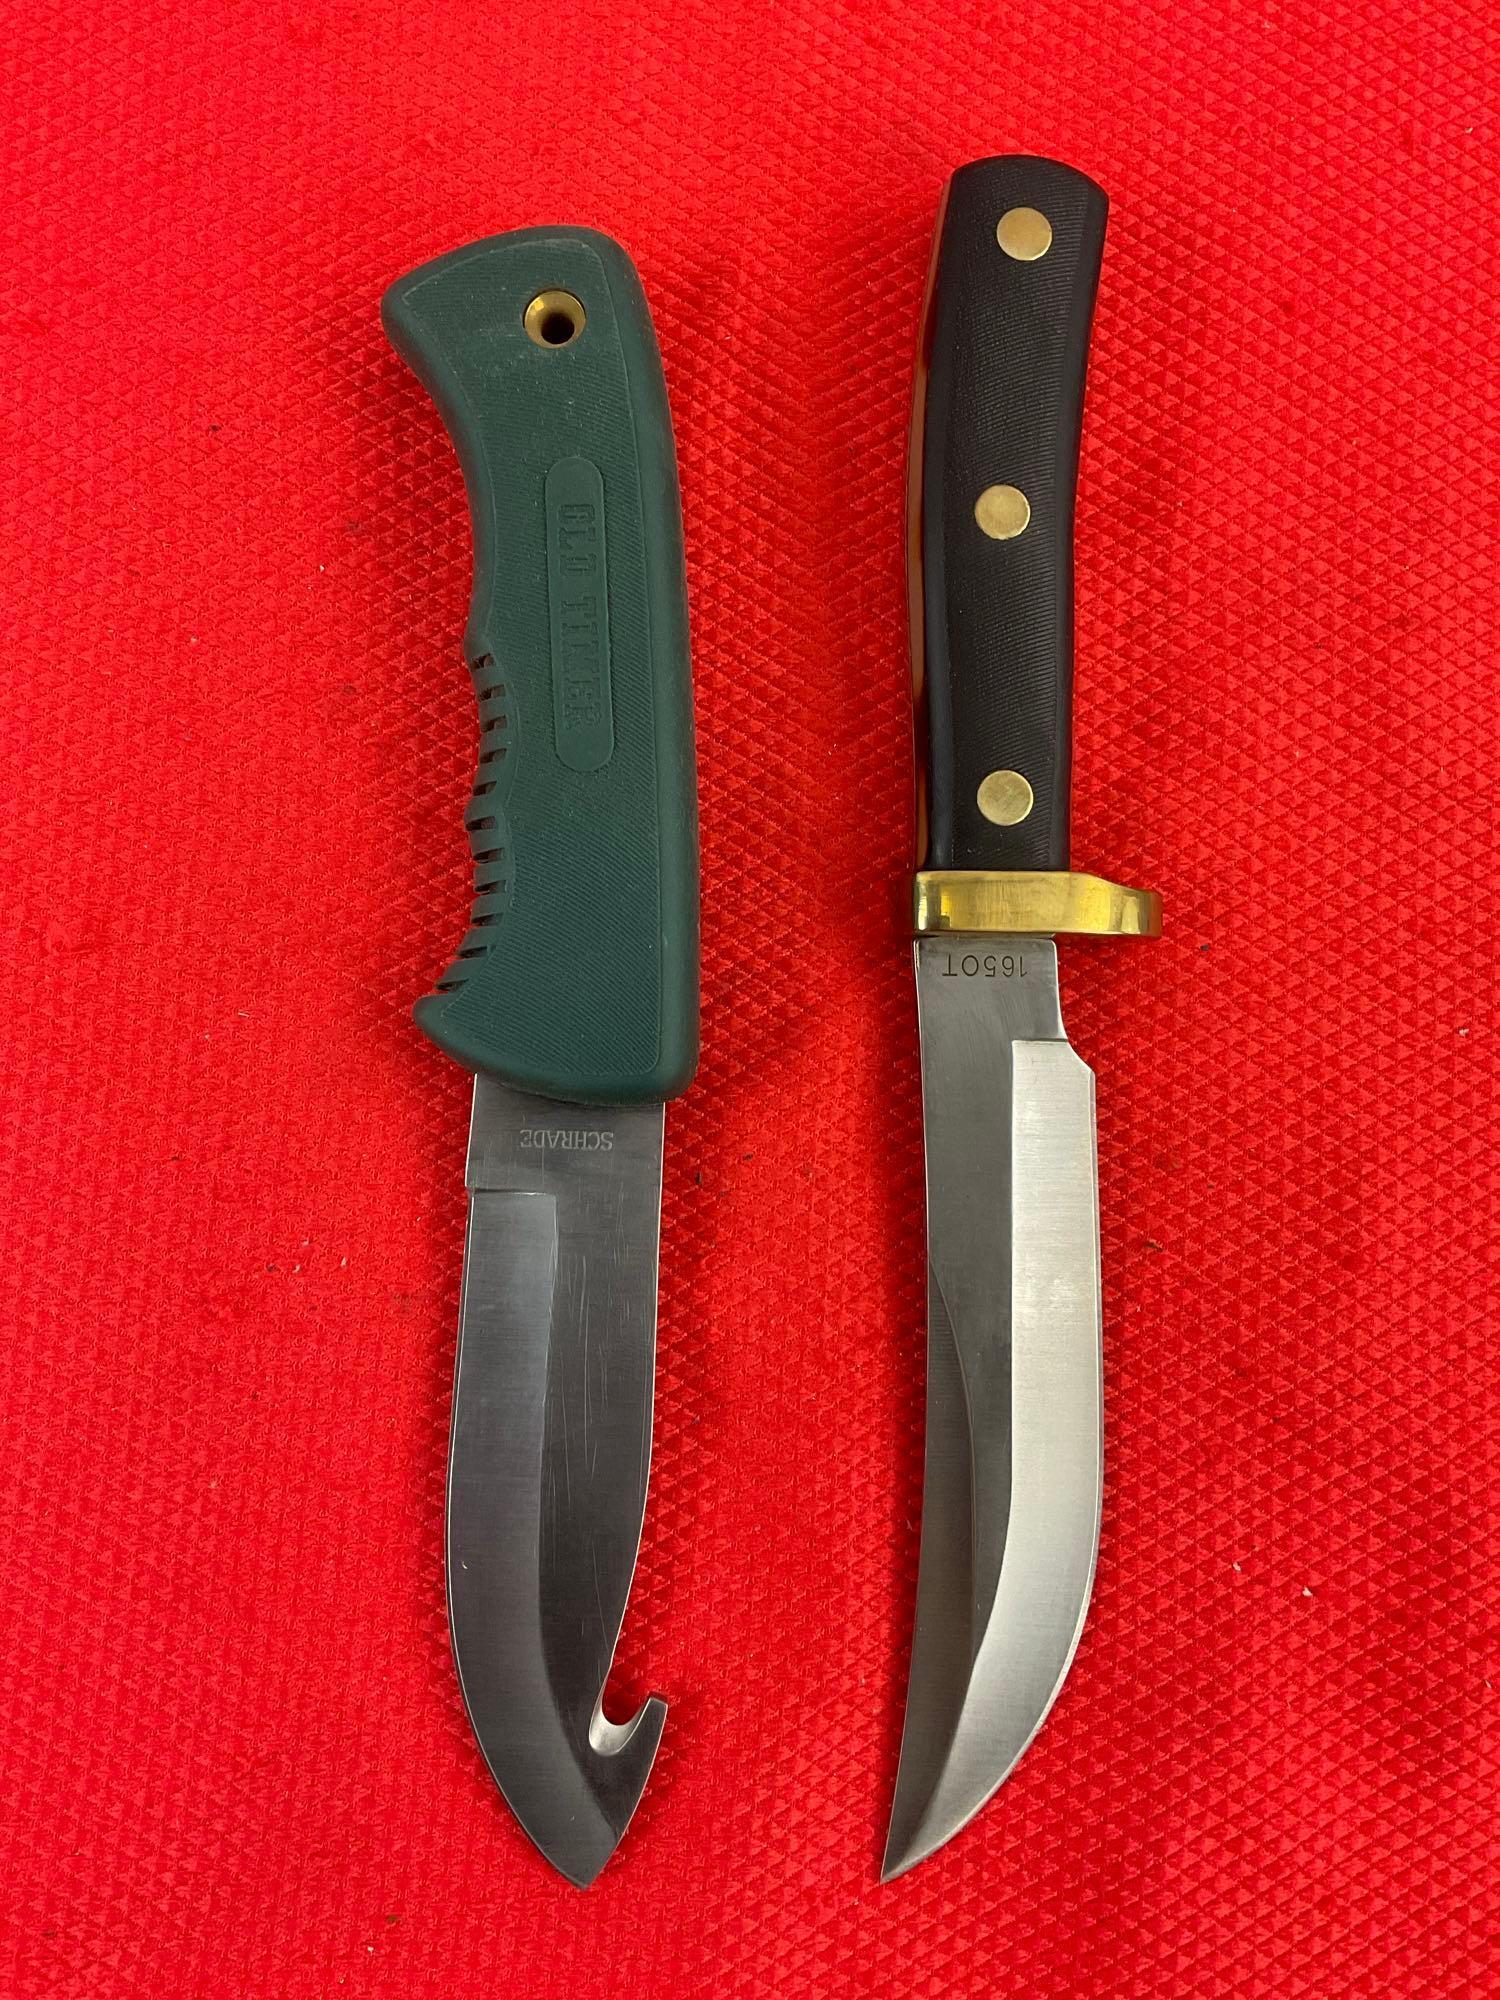 2 pcs Schrade Steel Fixed Blade Hunting Knives w/ Sheathes Models 1430T & 1650T. NIB. See pics.